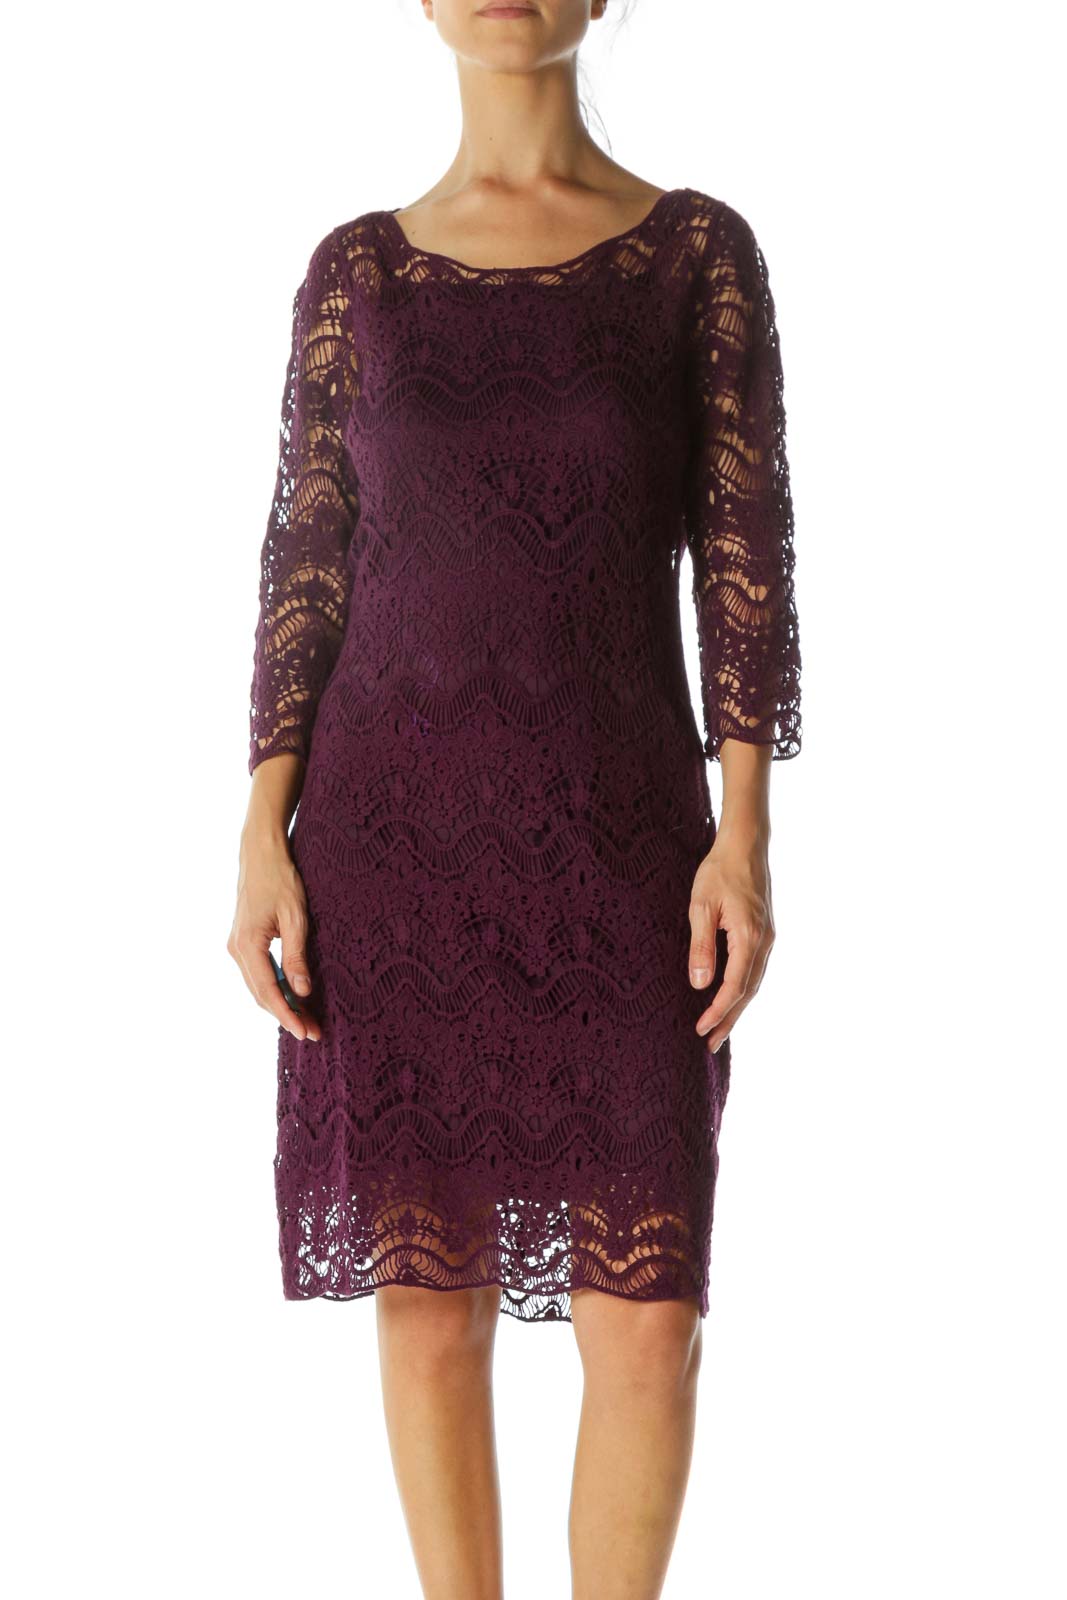 Purple Lace Cotton-Knit 3/4 Sleeve Knit Dress Front